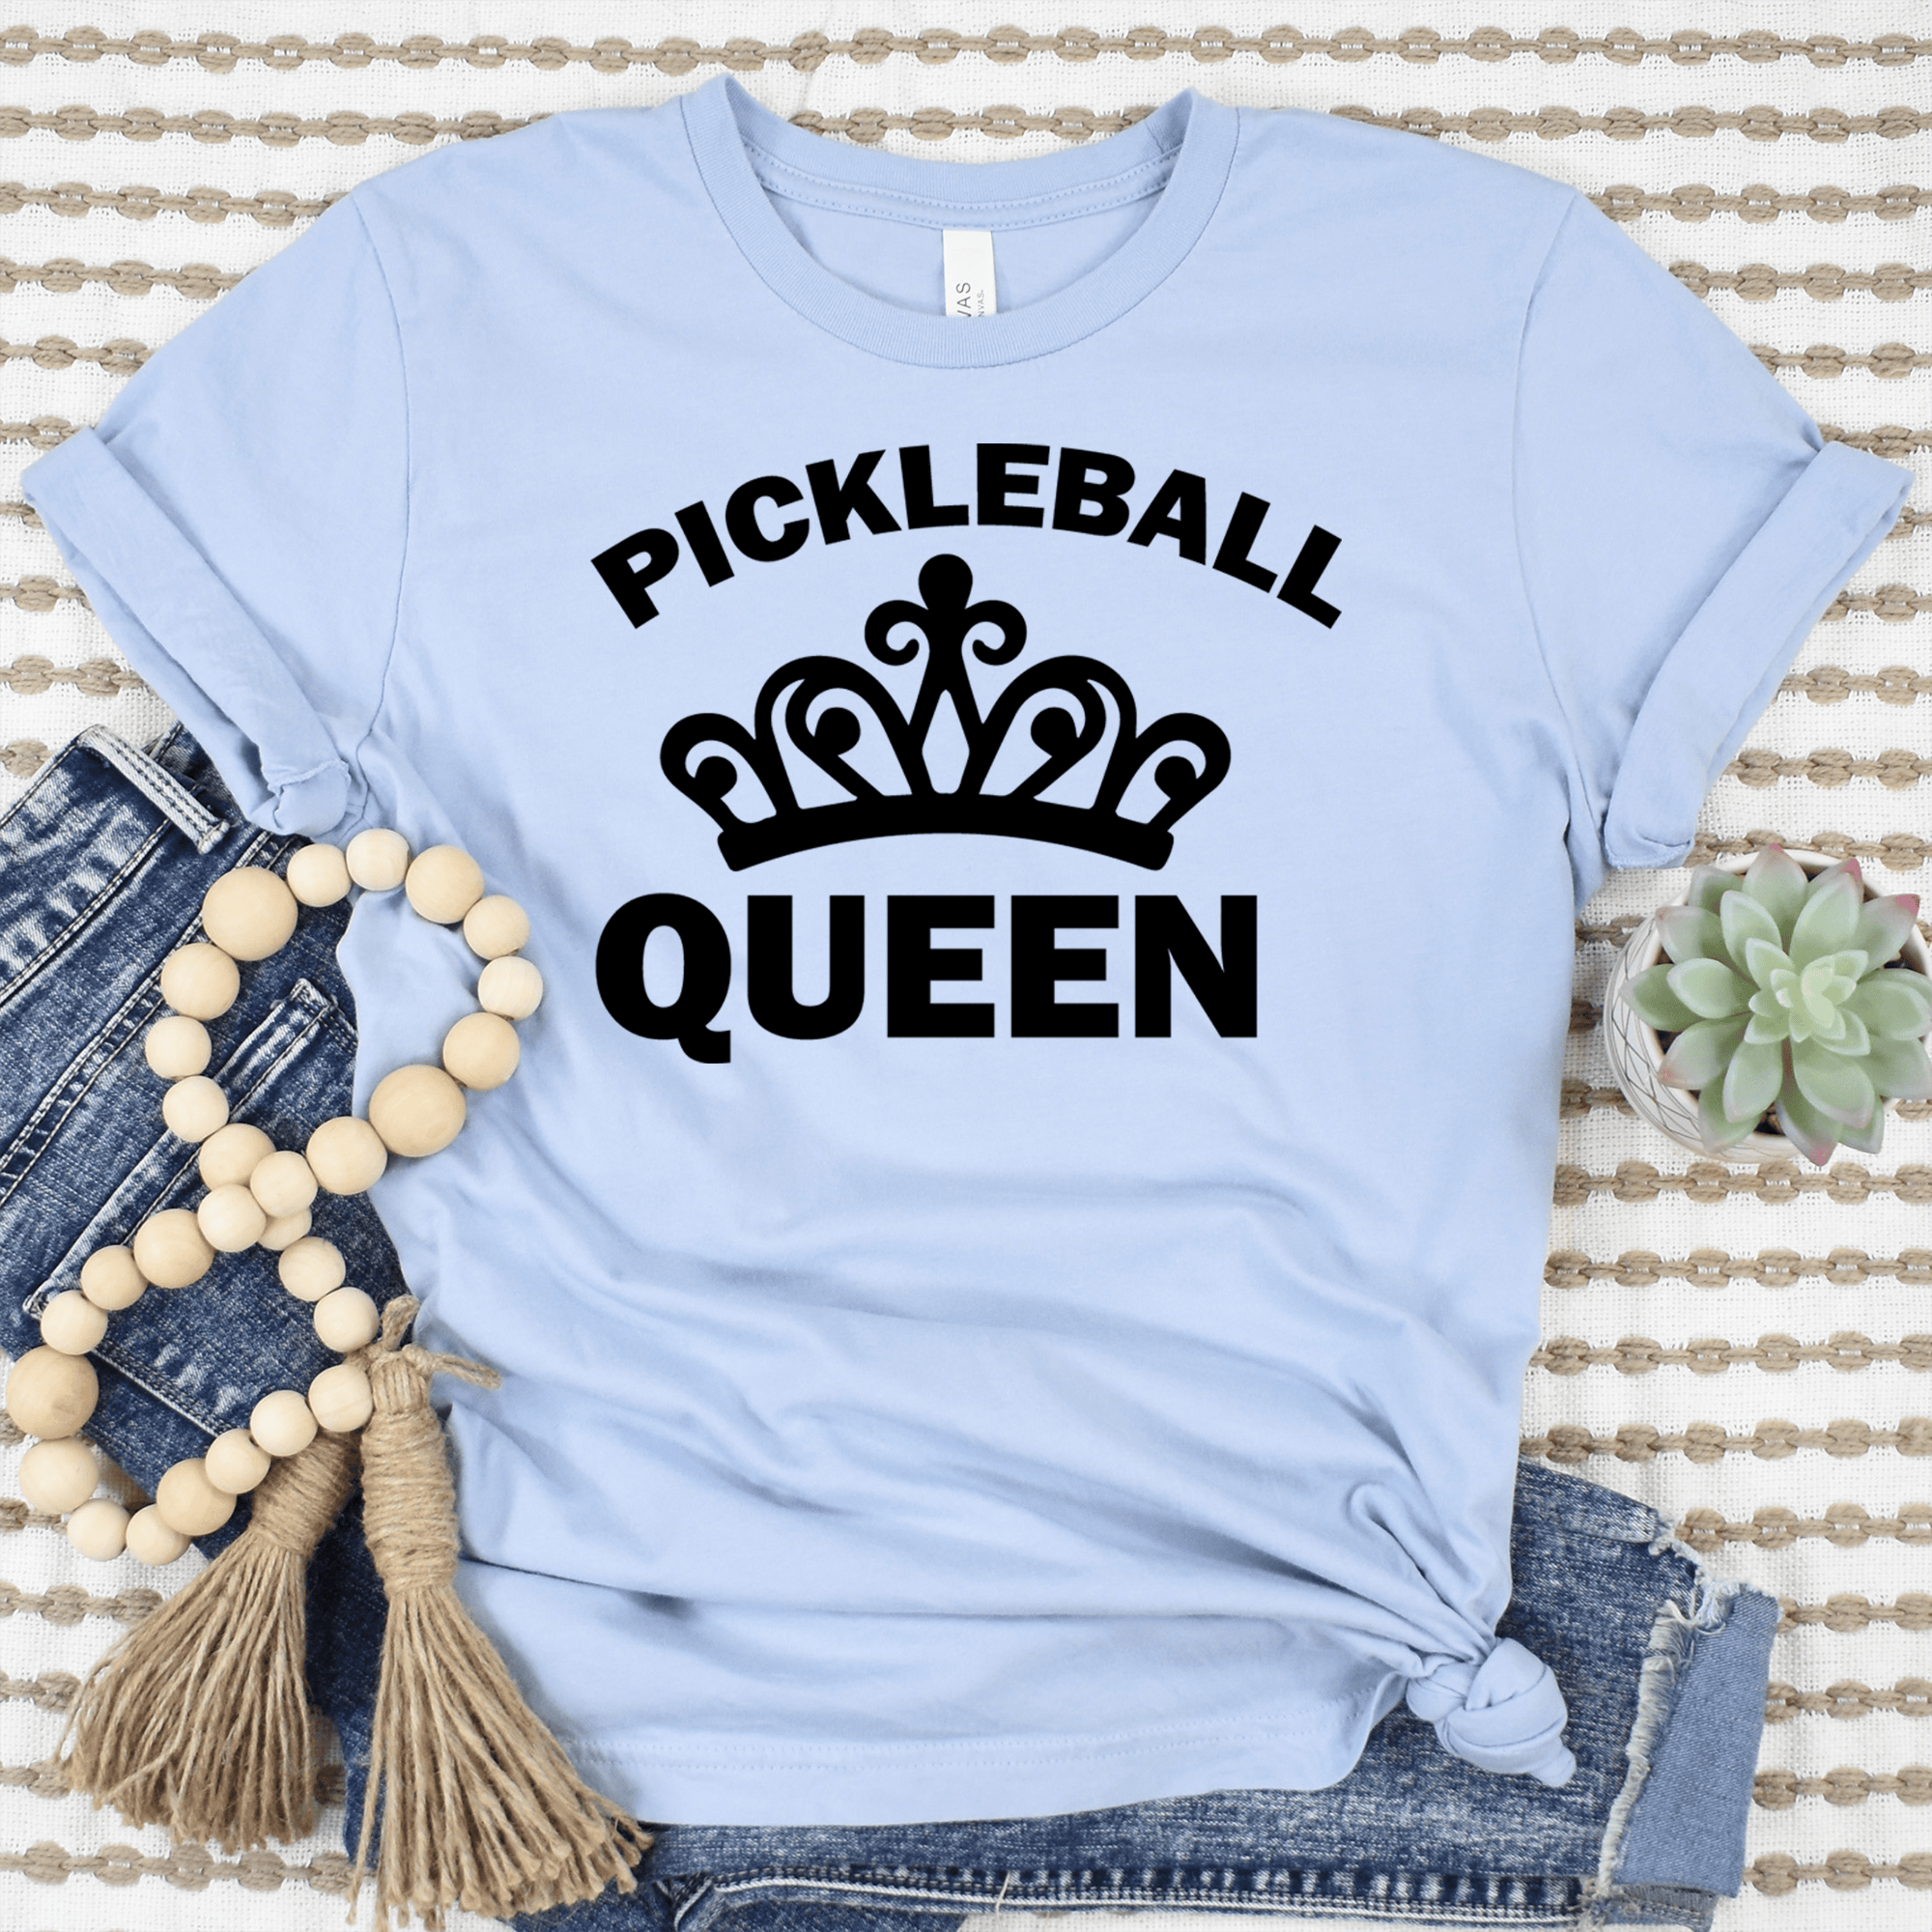 Womens Light Blue T Shirt with The-Pickleball-Queen design